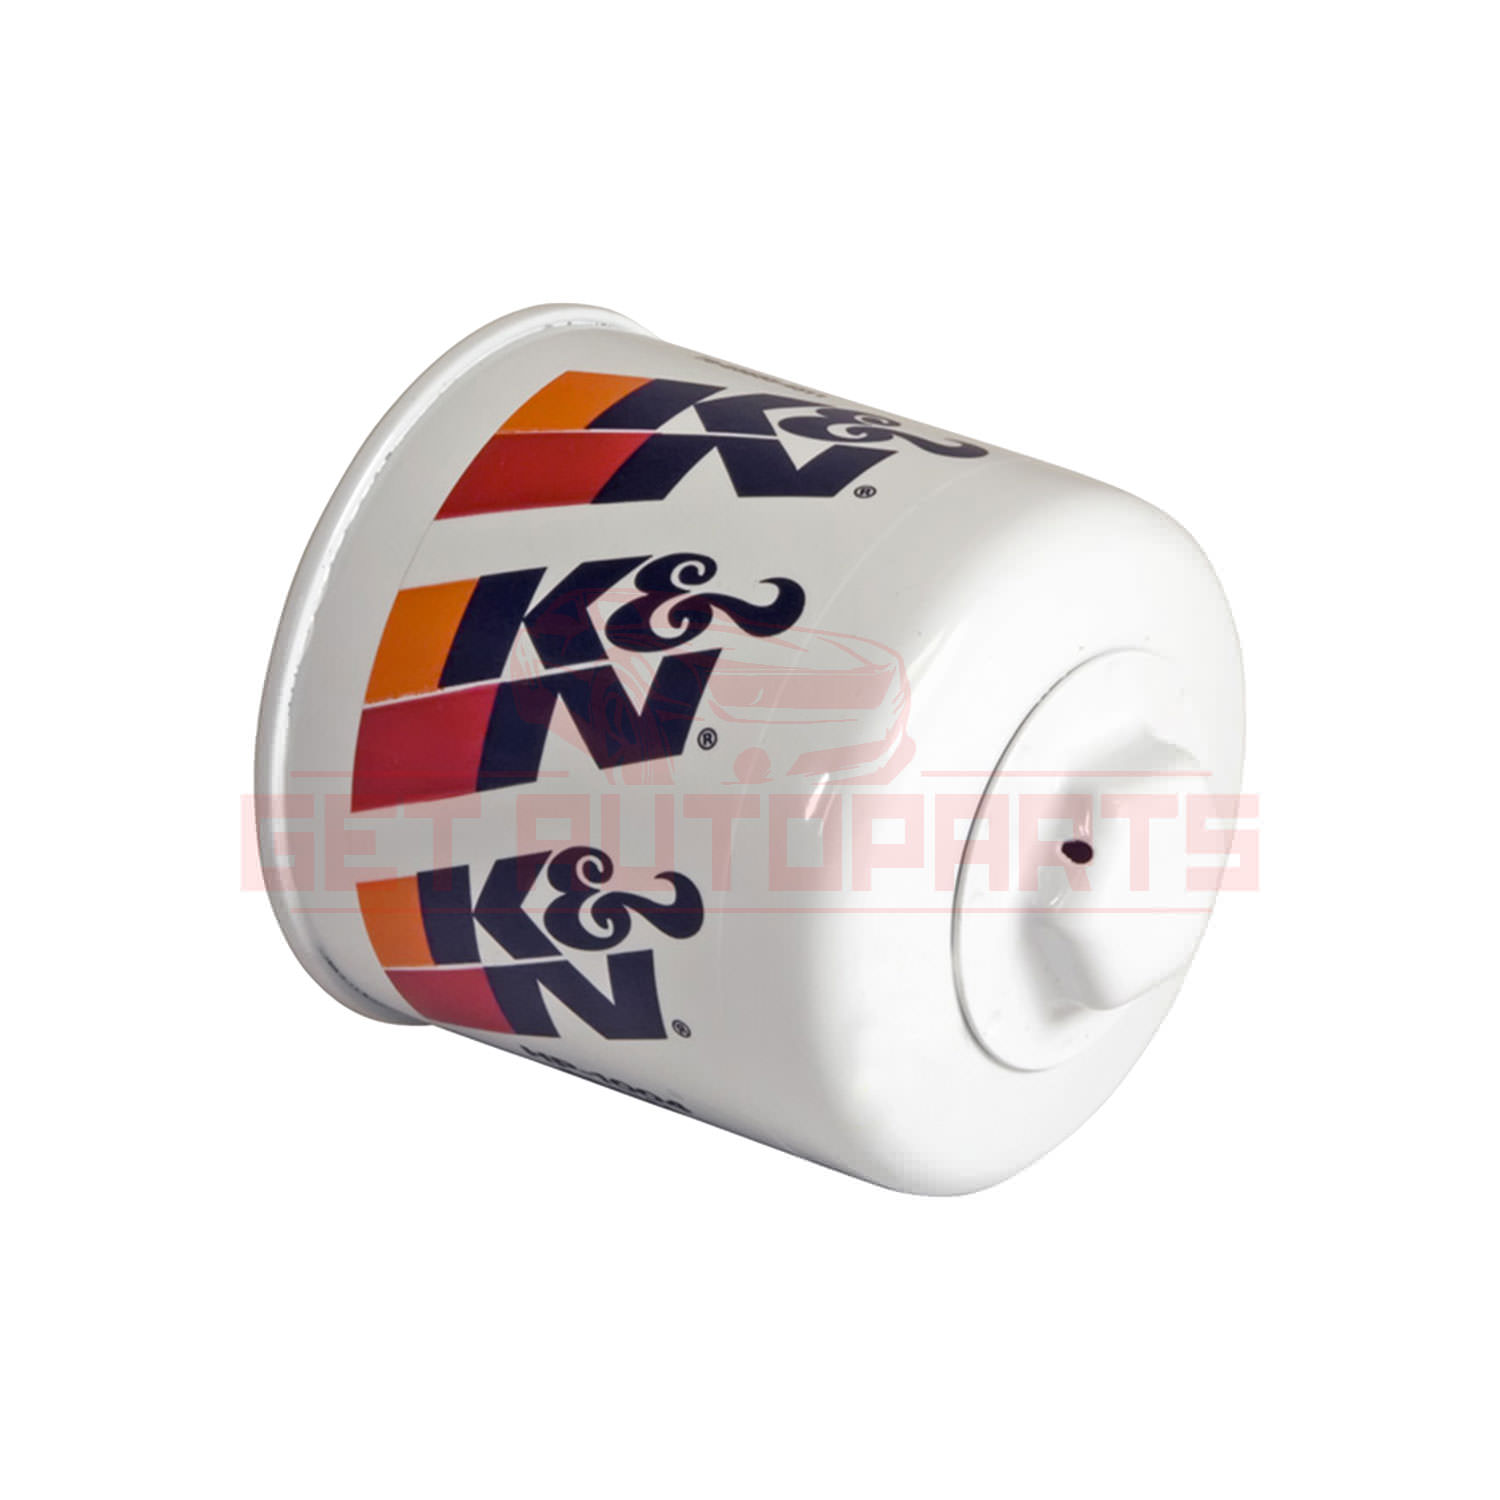 K&N Oil Filter for Isuzu Oasis 1996-99